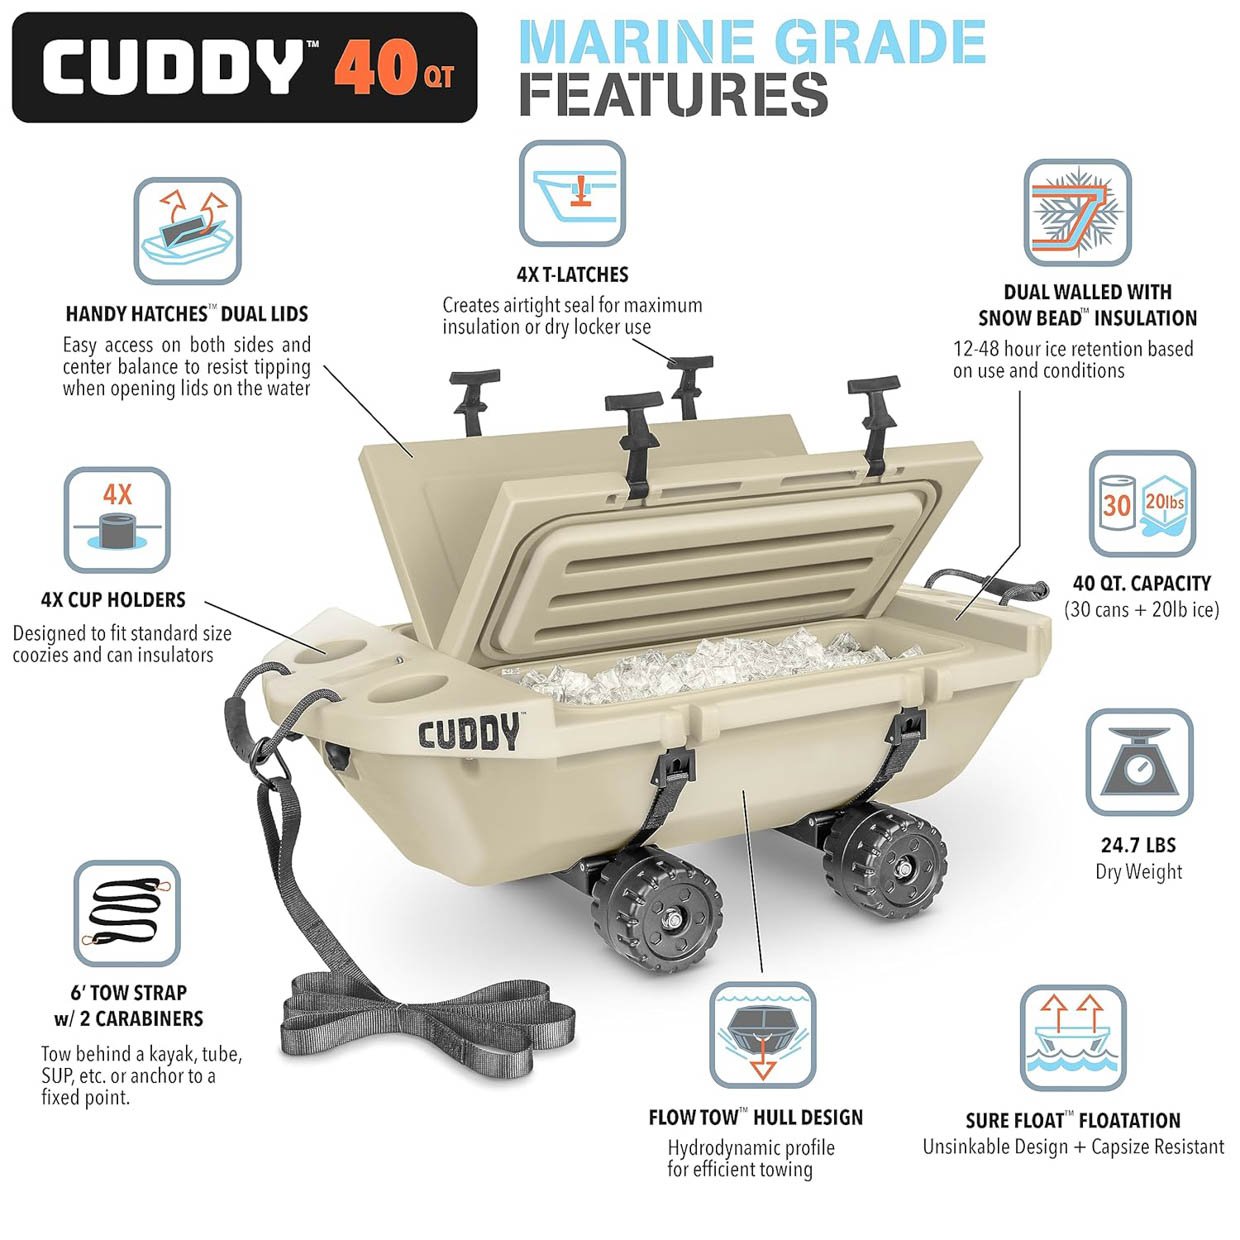 Cuddy Crawler Amphibious Cooler